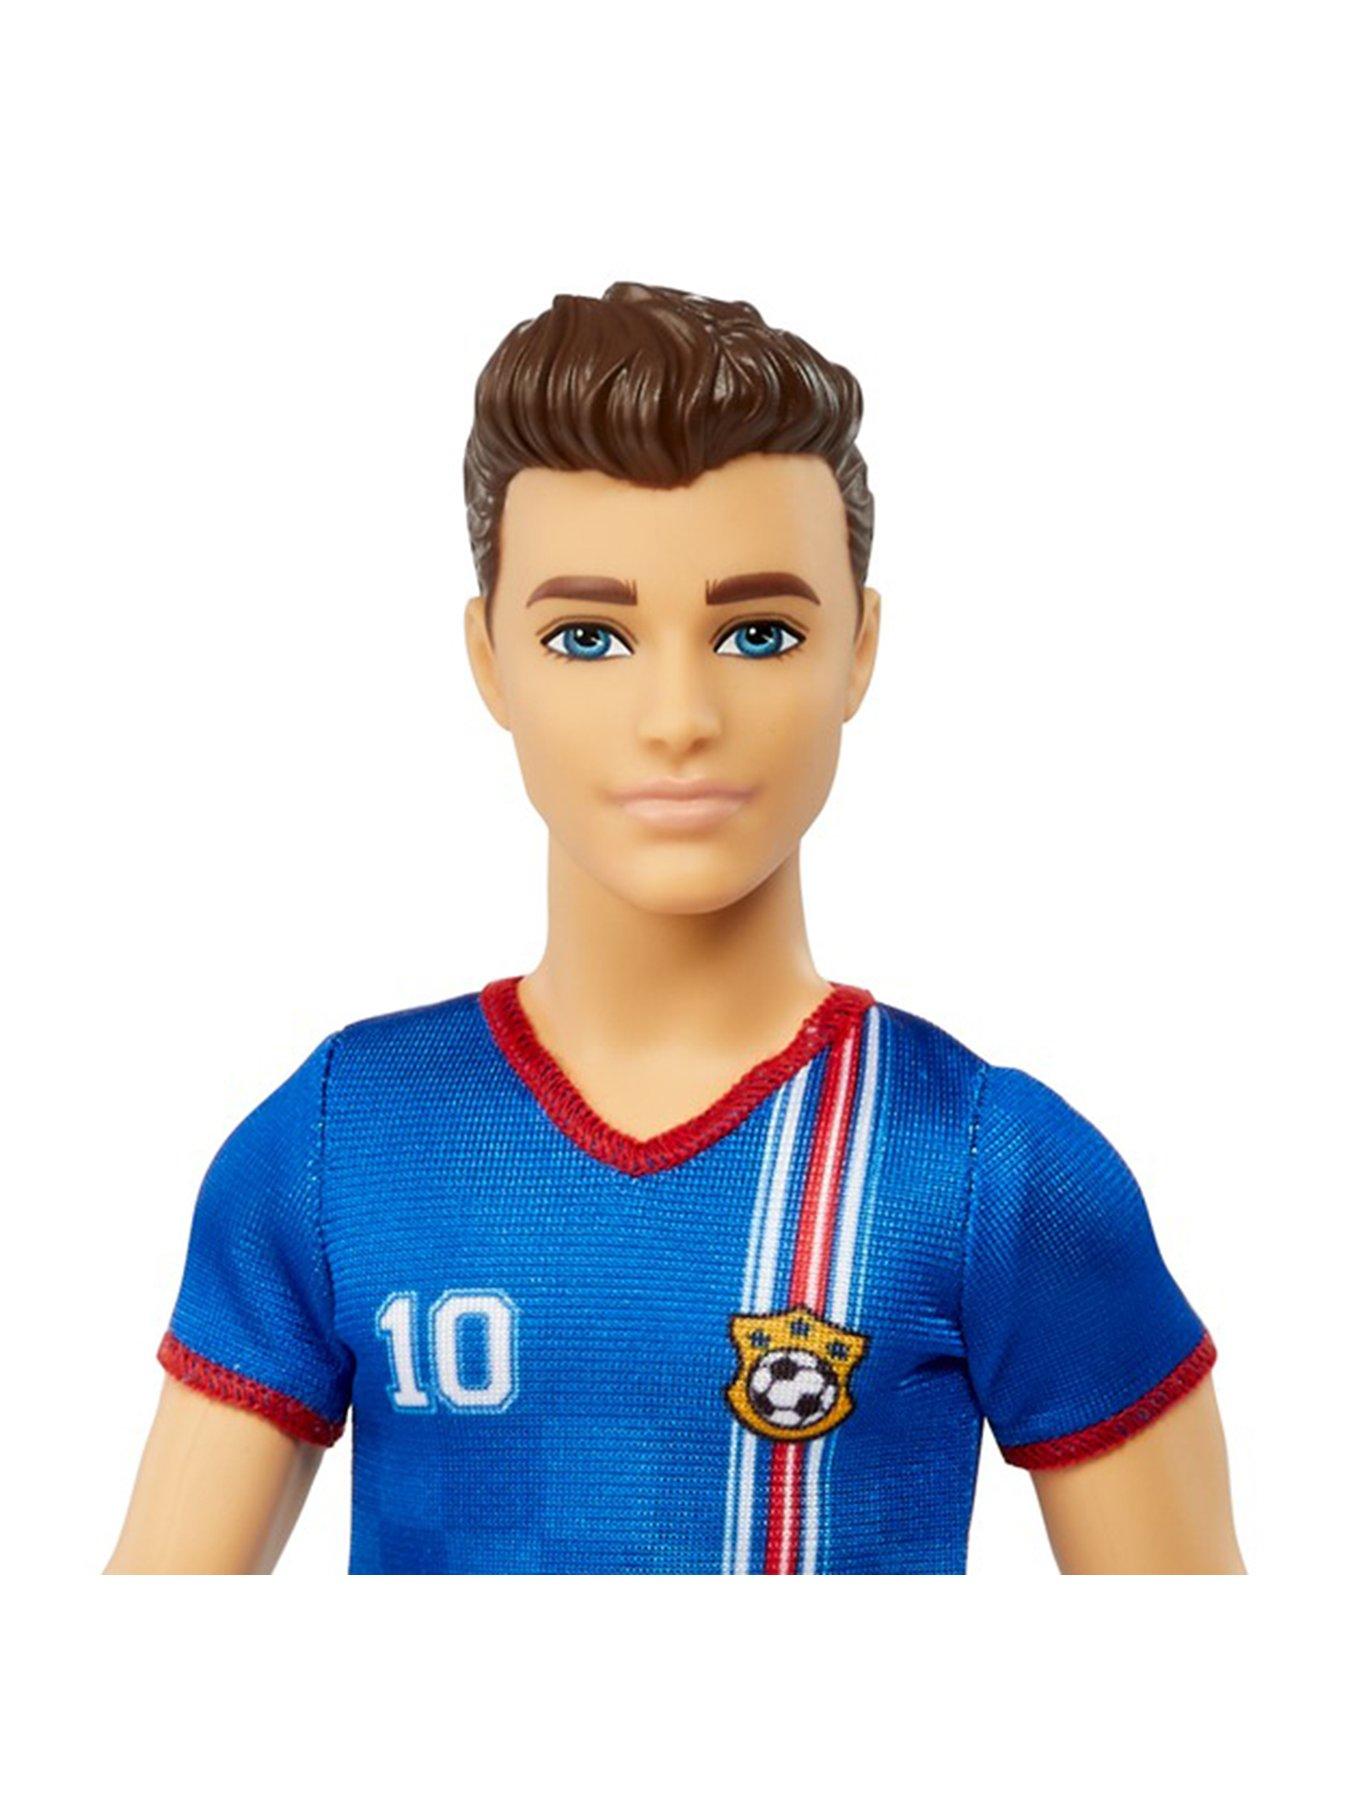 Barbie Ken Football Doll